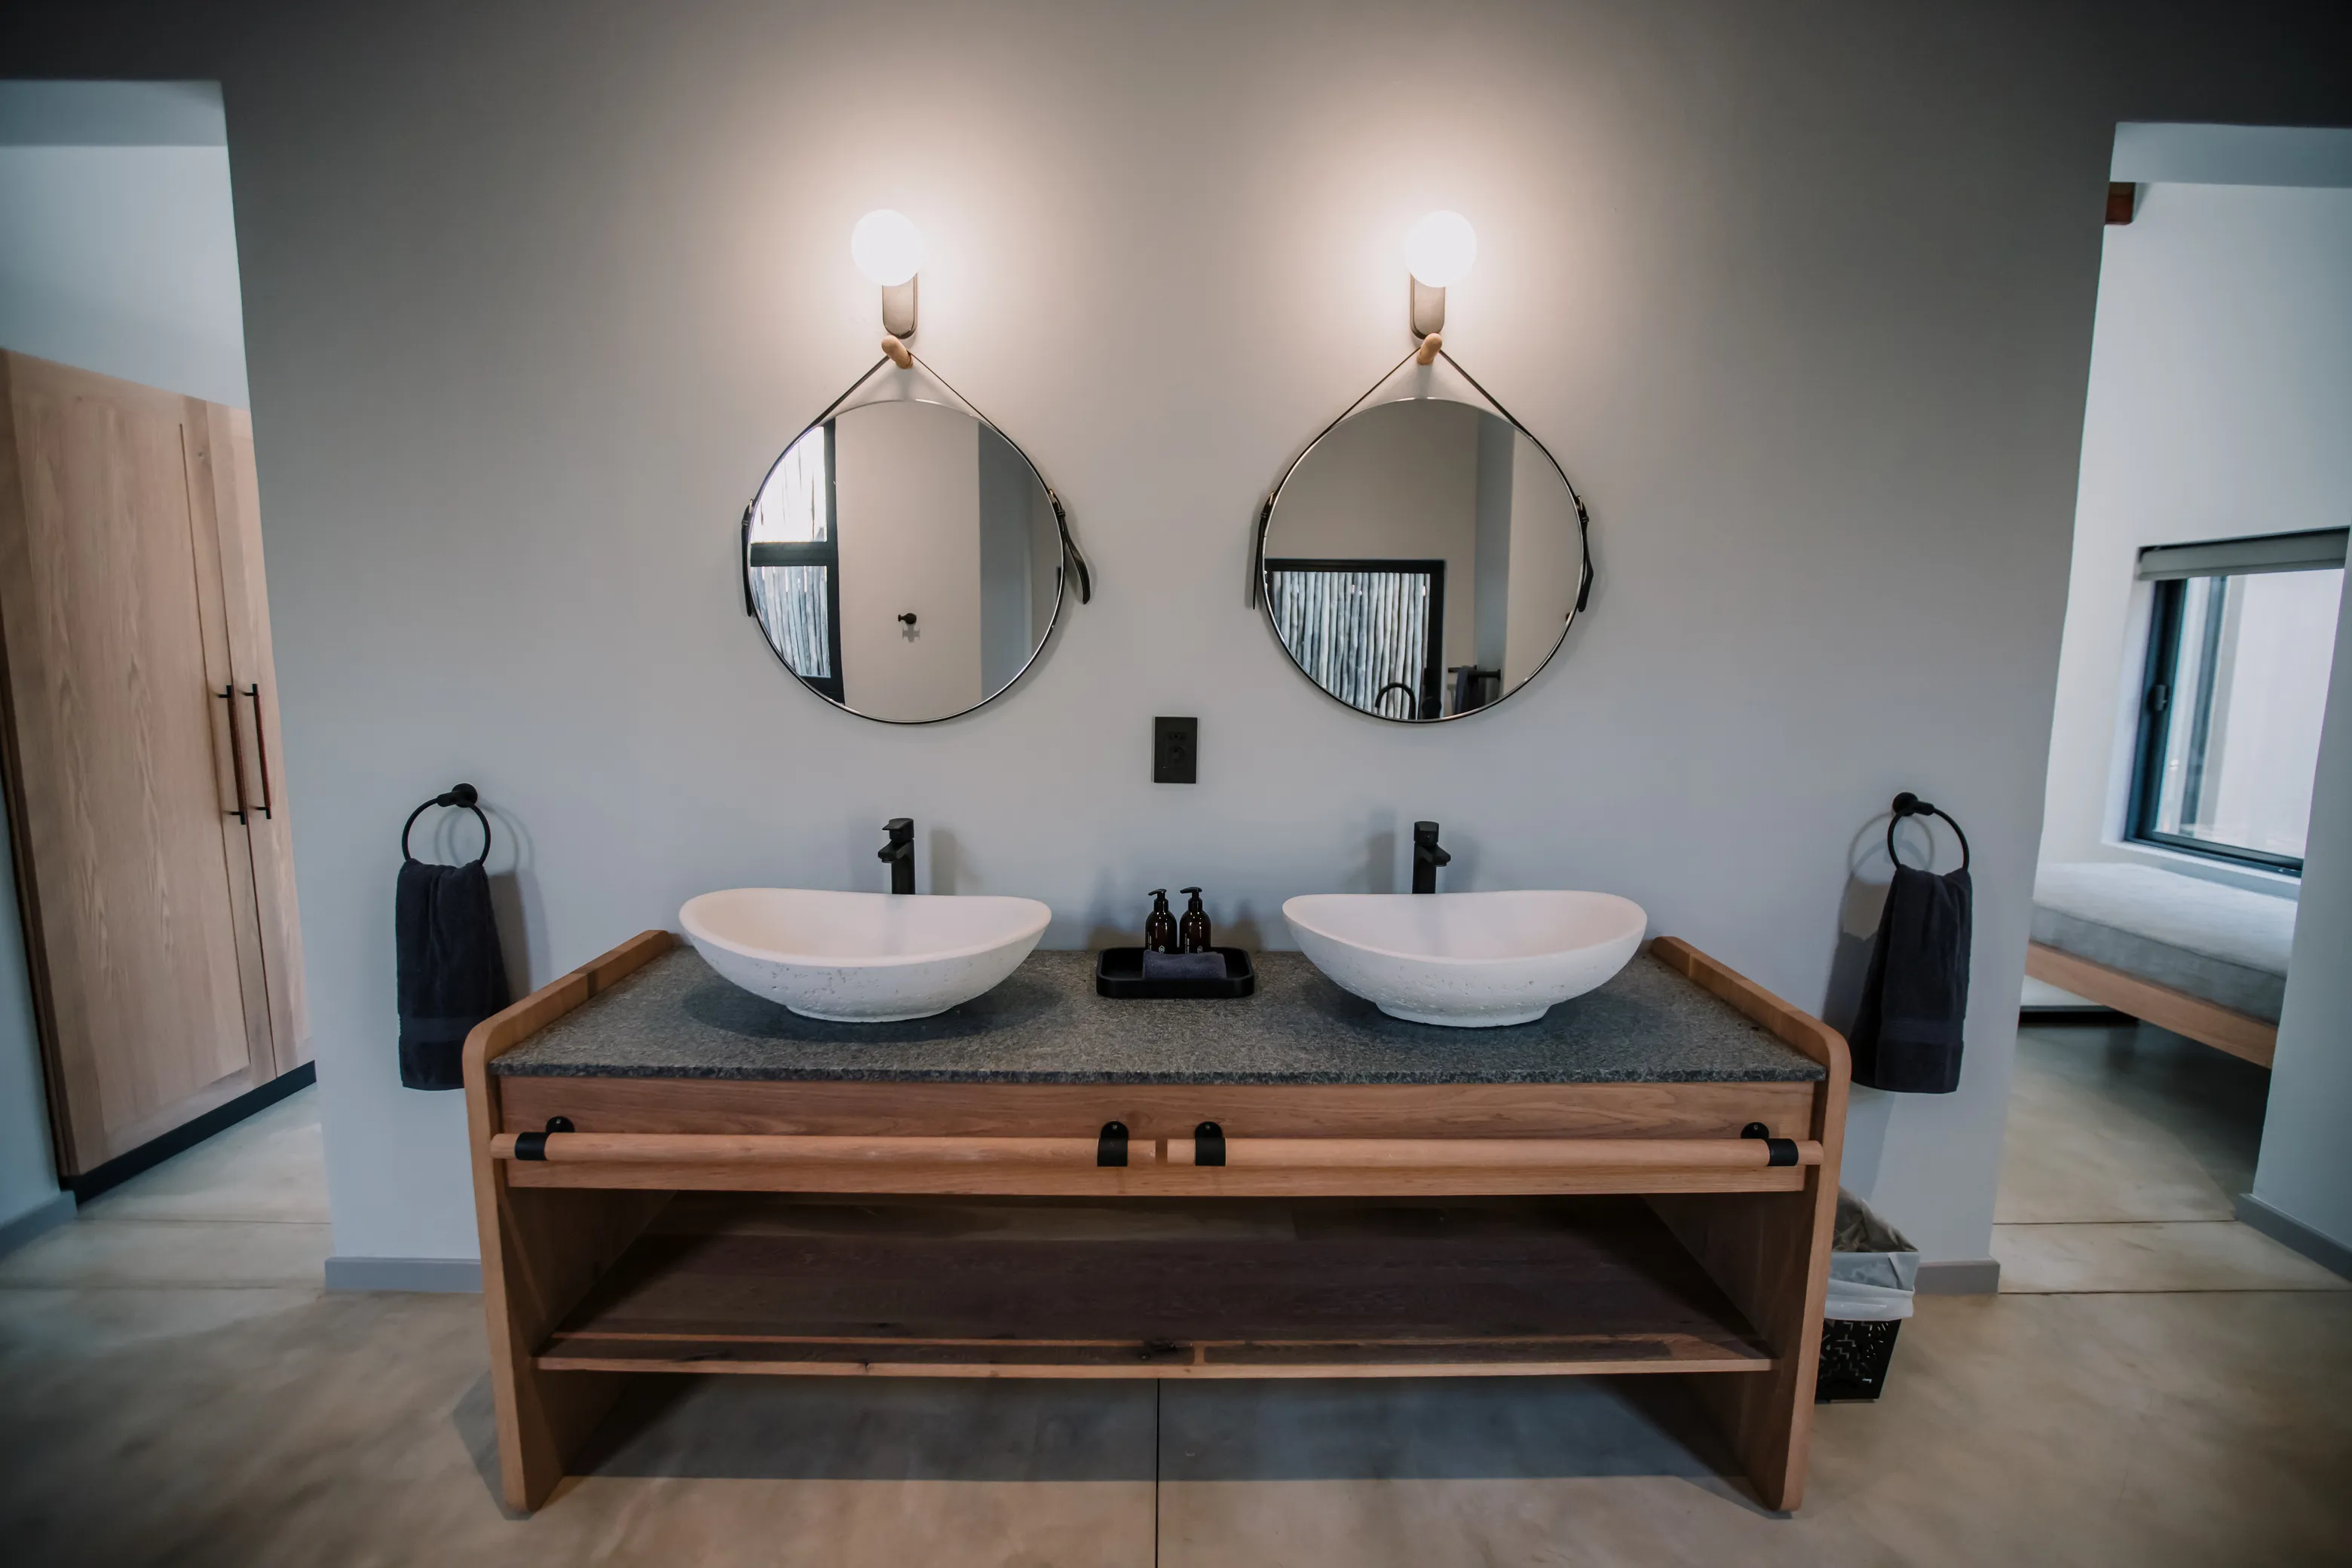 Two elegant sinks in a bathroom, each with their own circular mirror.